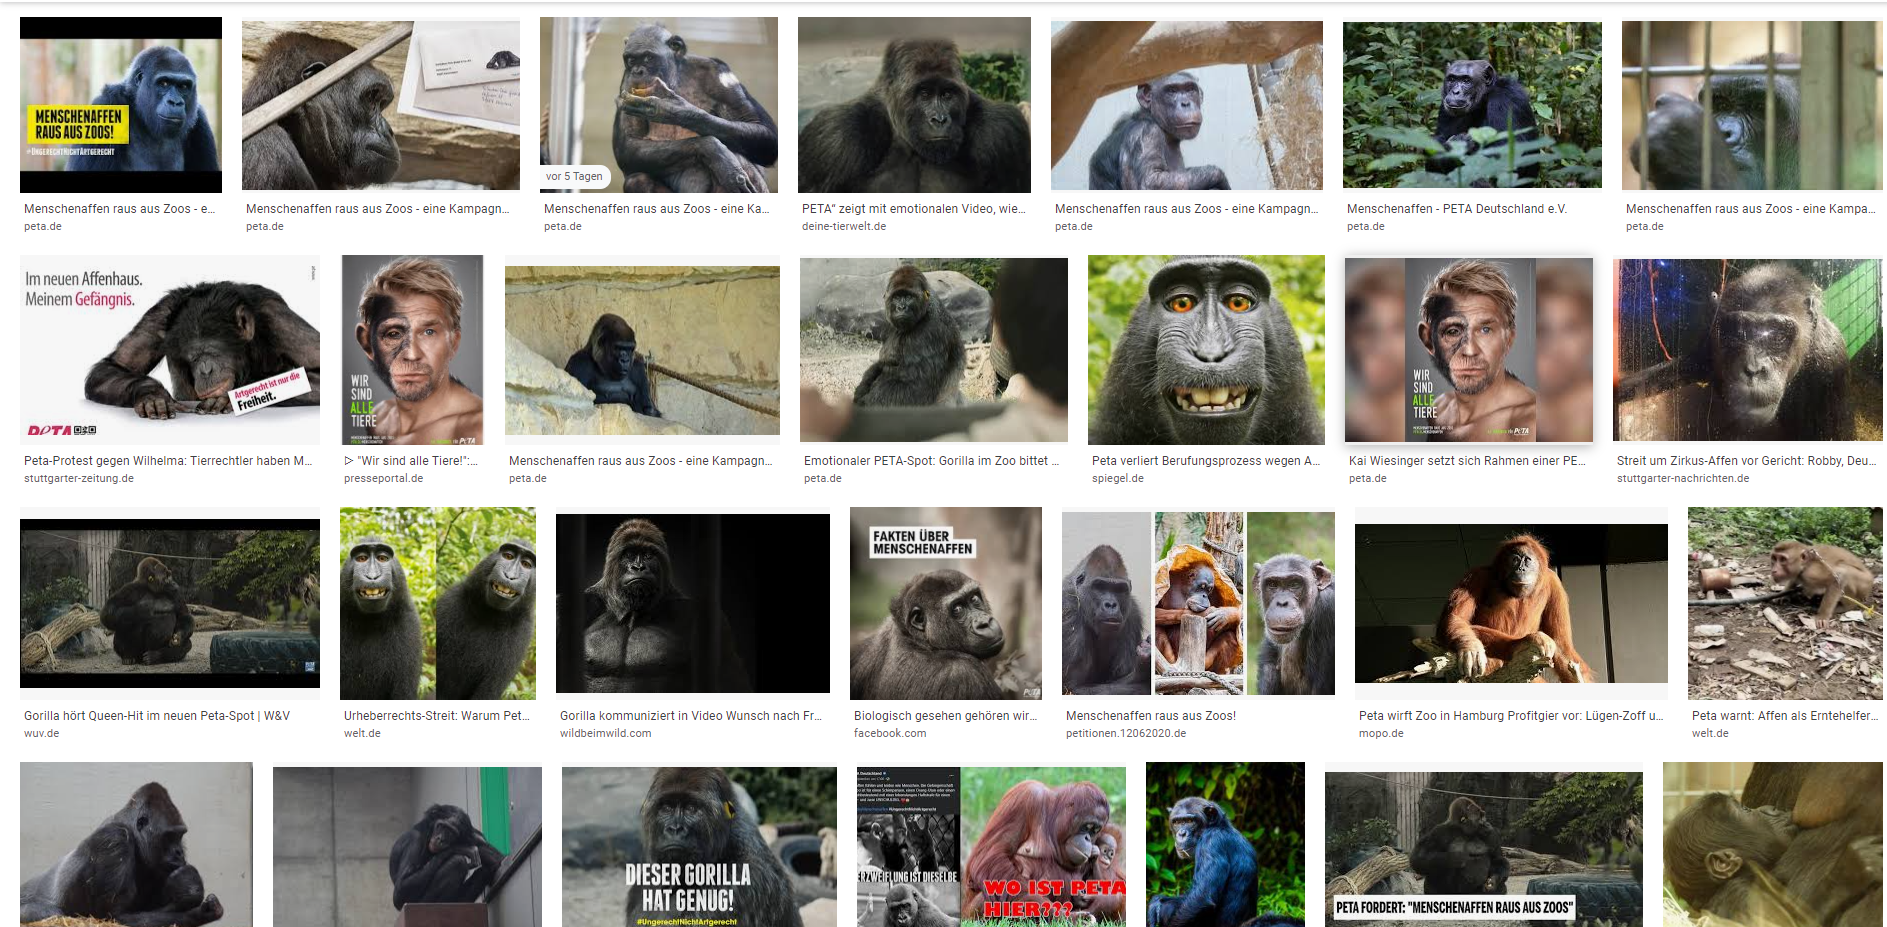 Peta Kampagne gegen Affenhaltung in Zoos